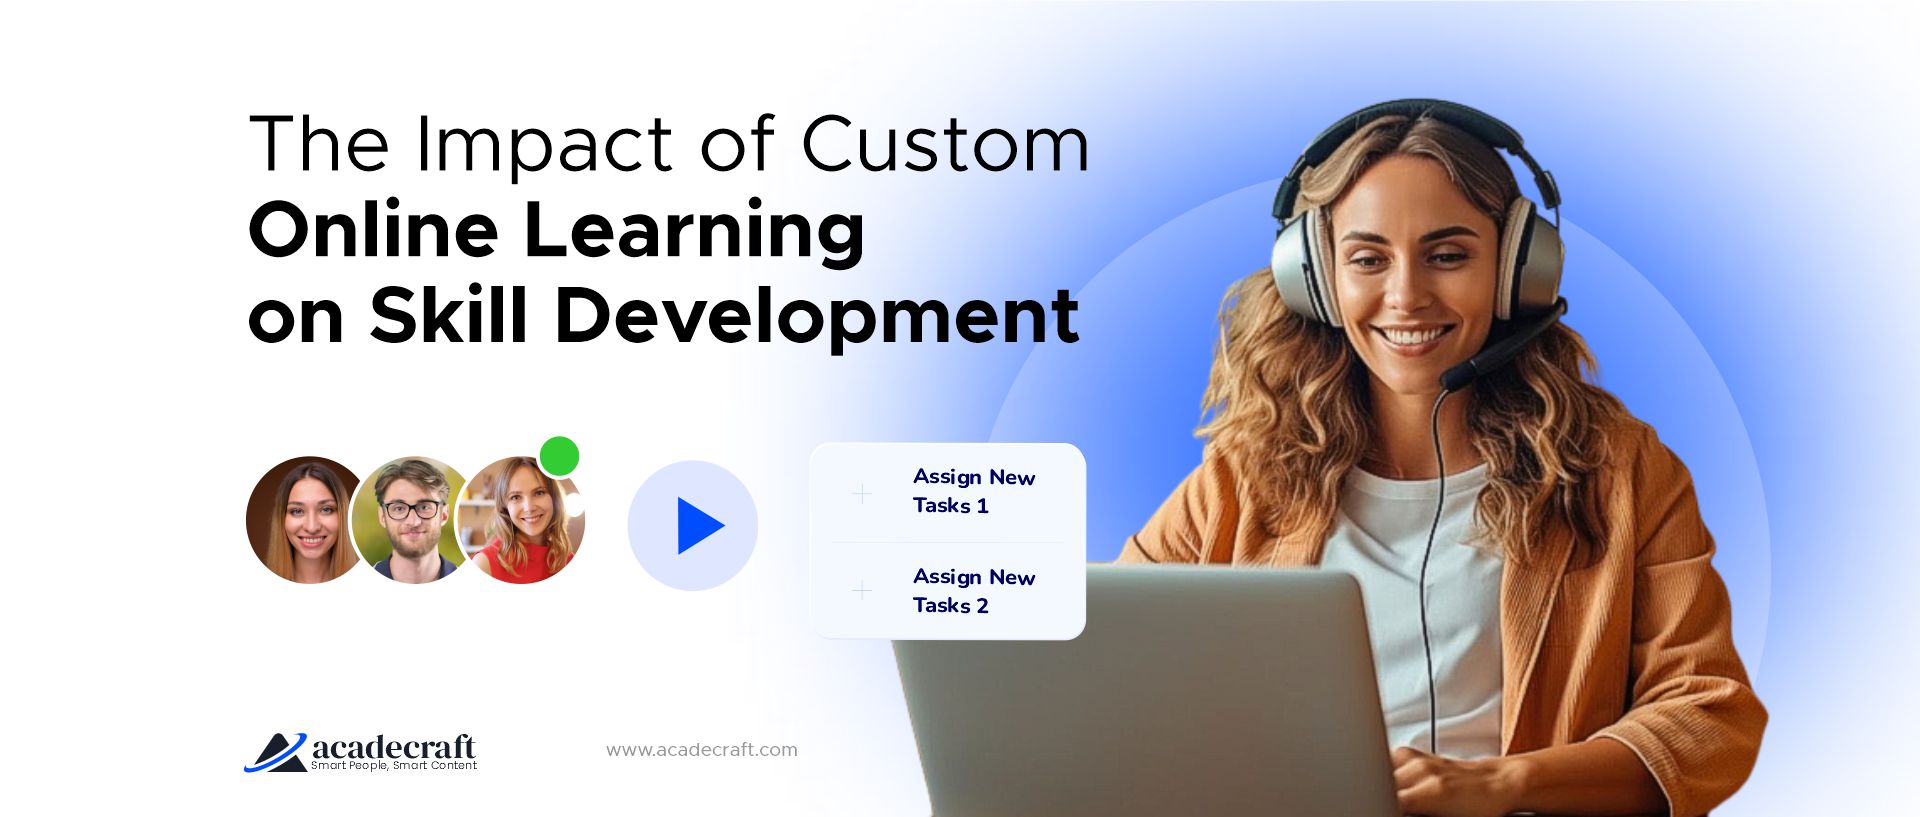 The Impact of Custom Online Learning on Skill Development